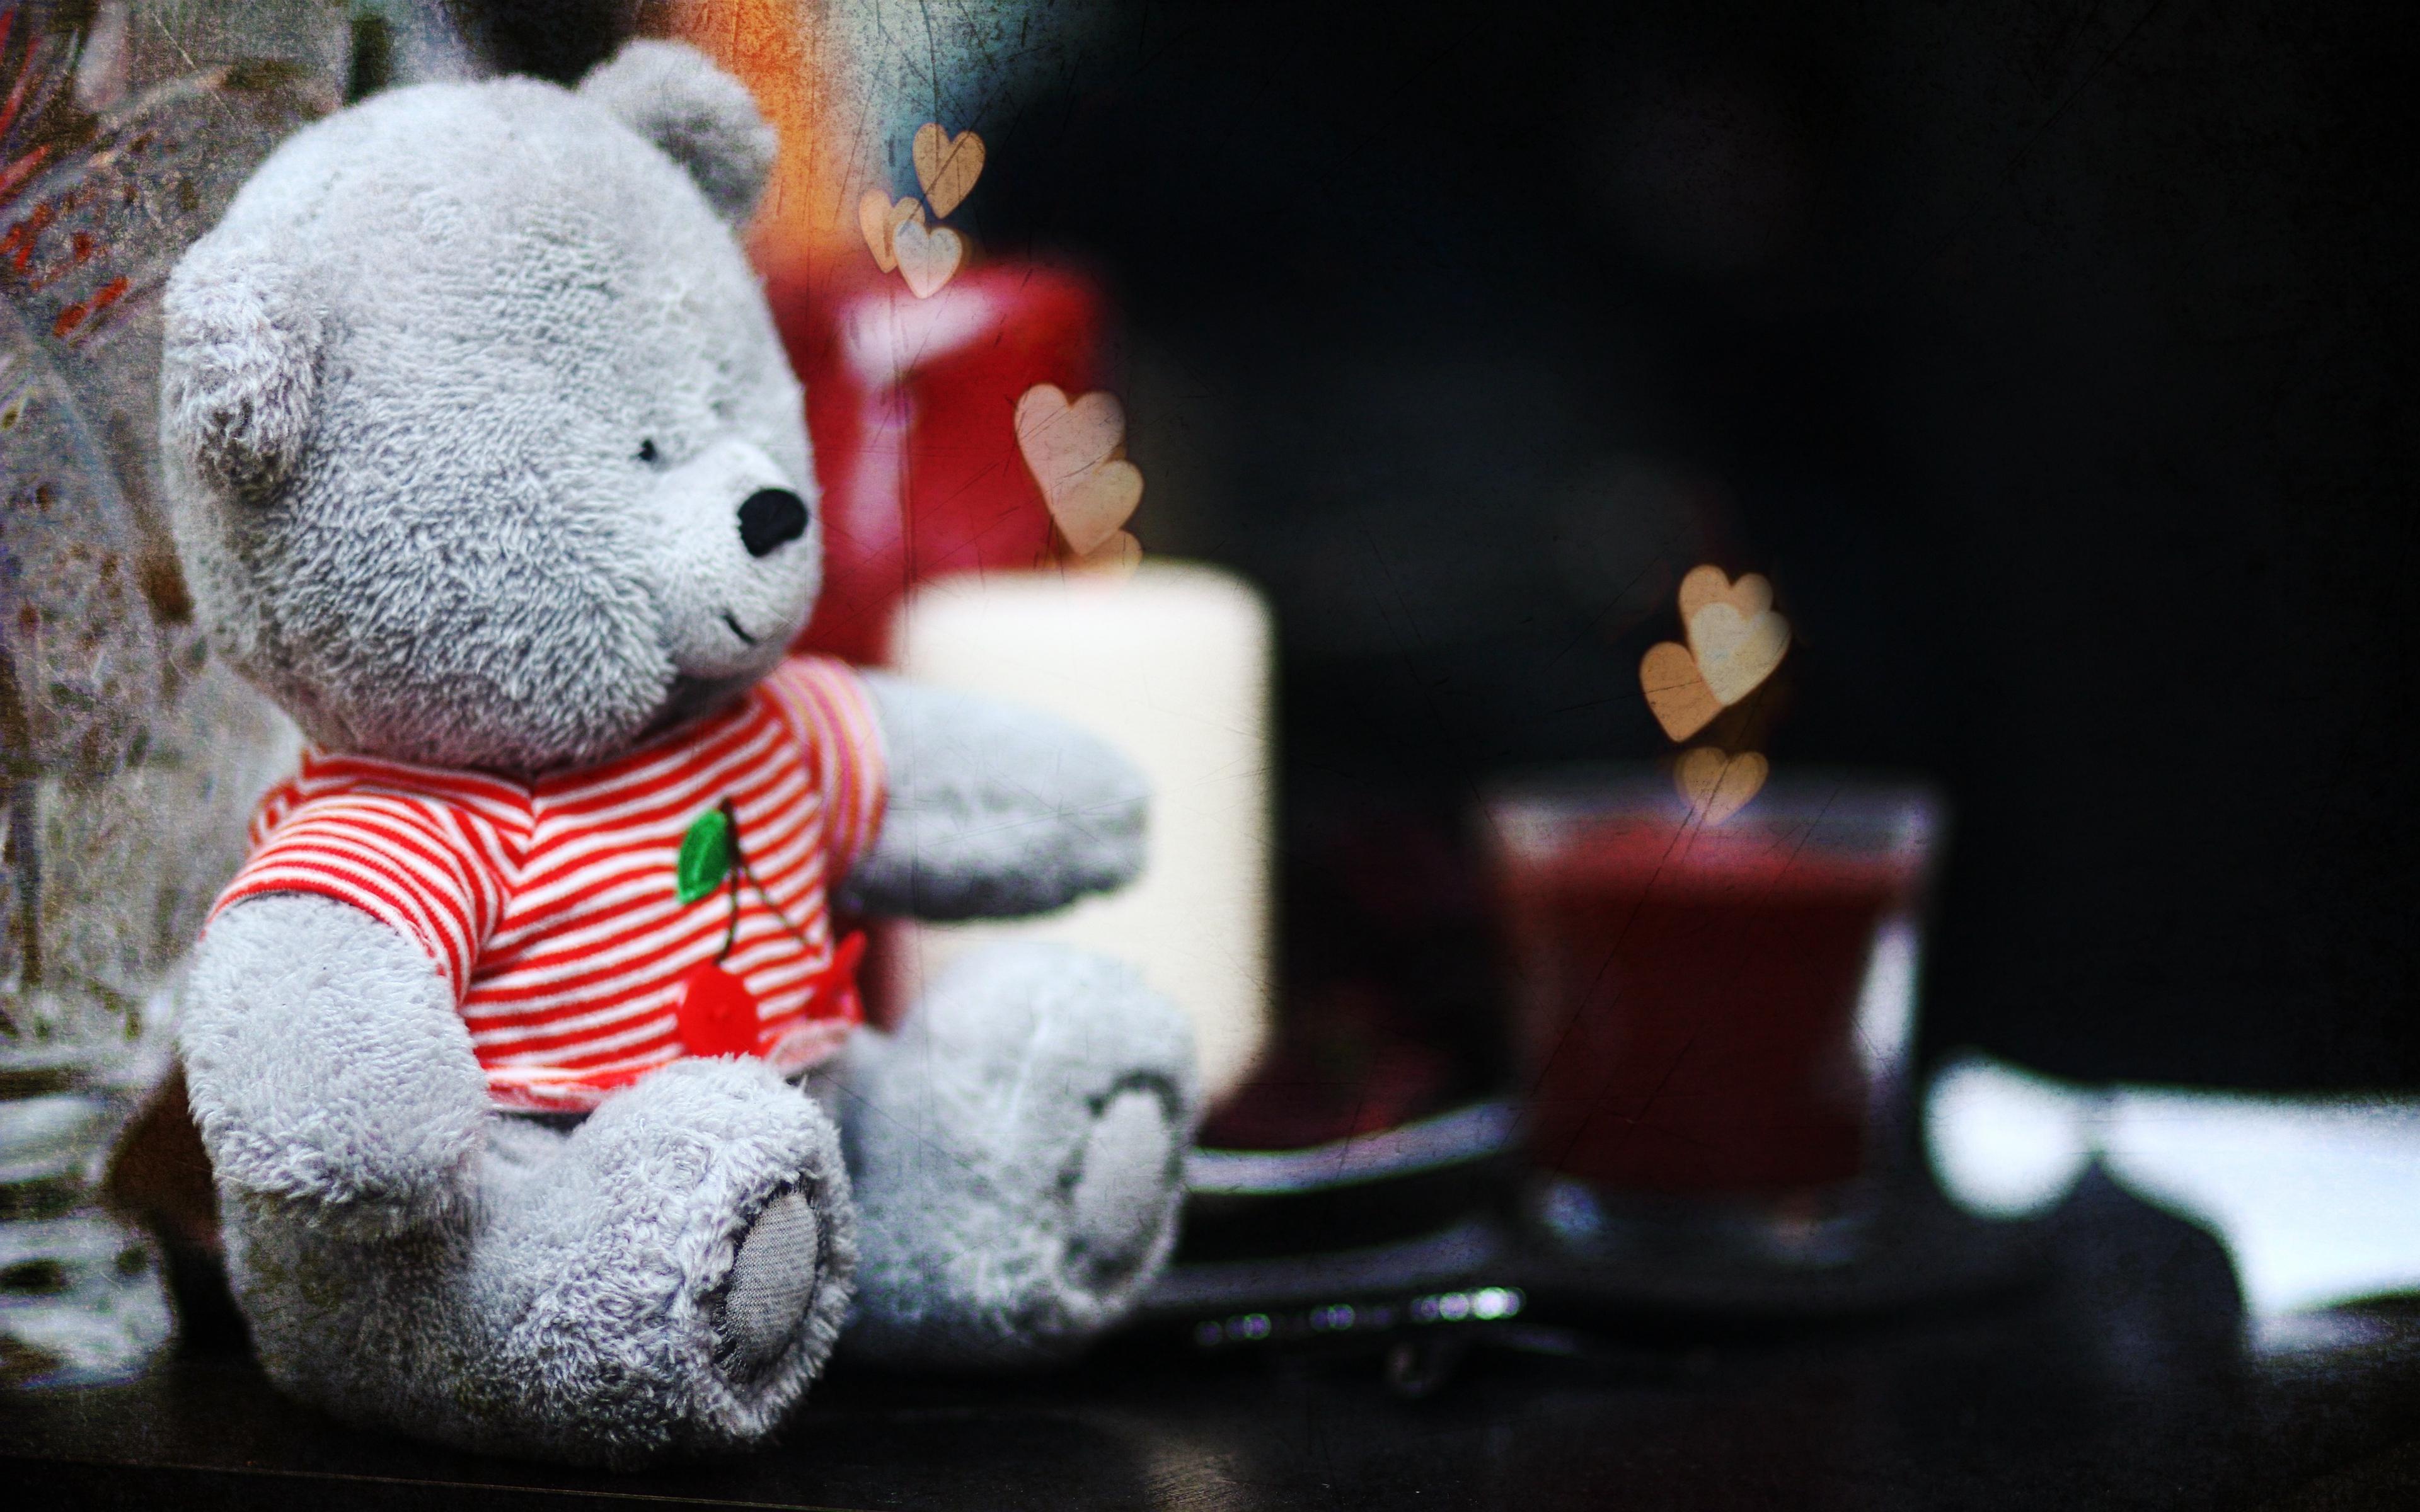 Download wallpaper 3840x2400 cute, teddy bear, candles